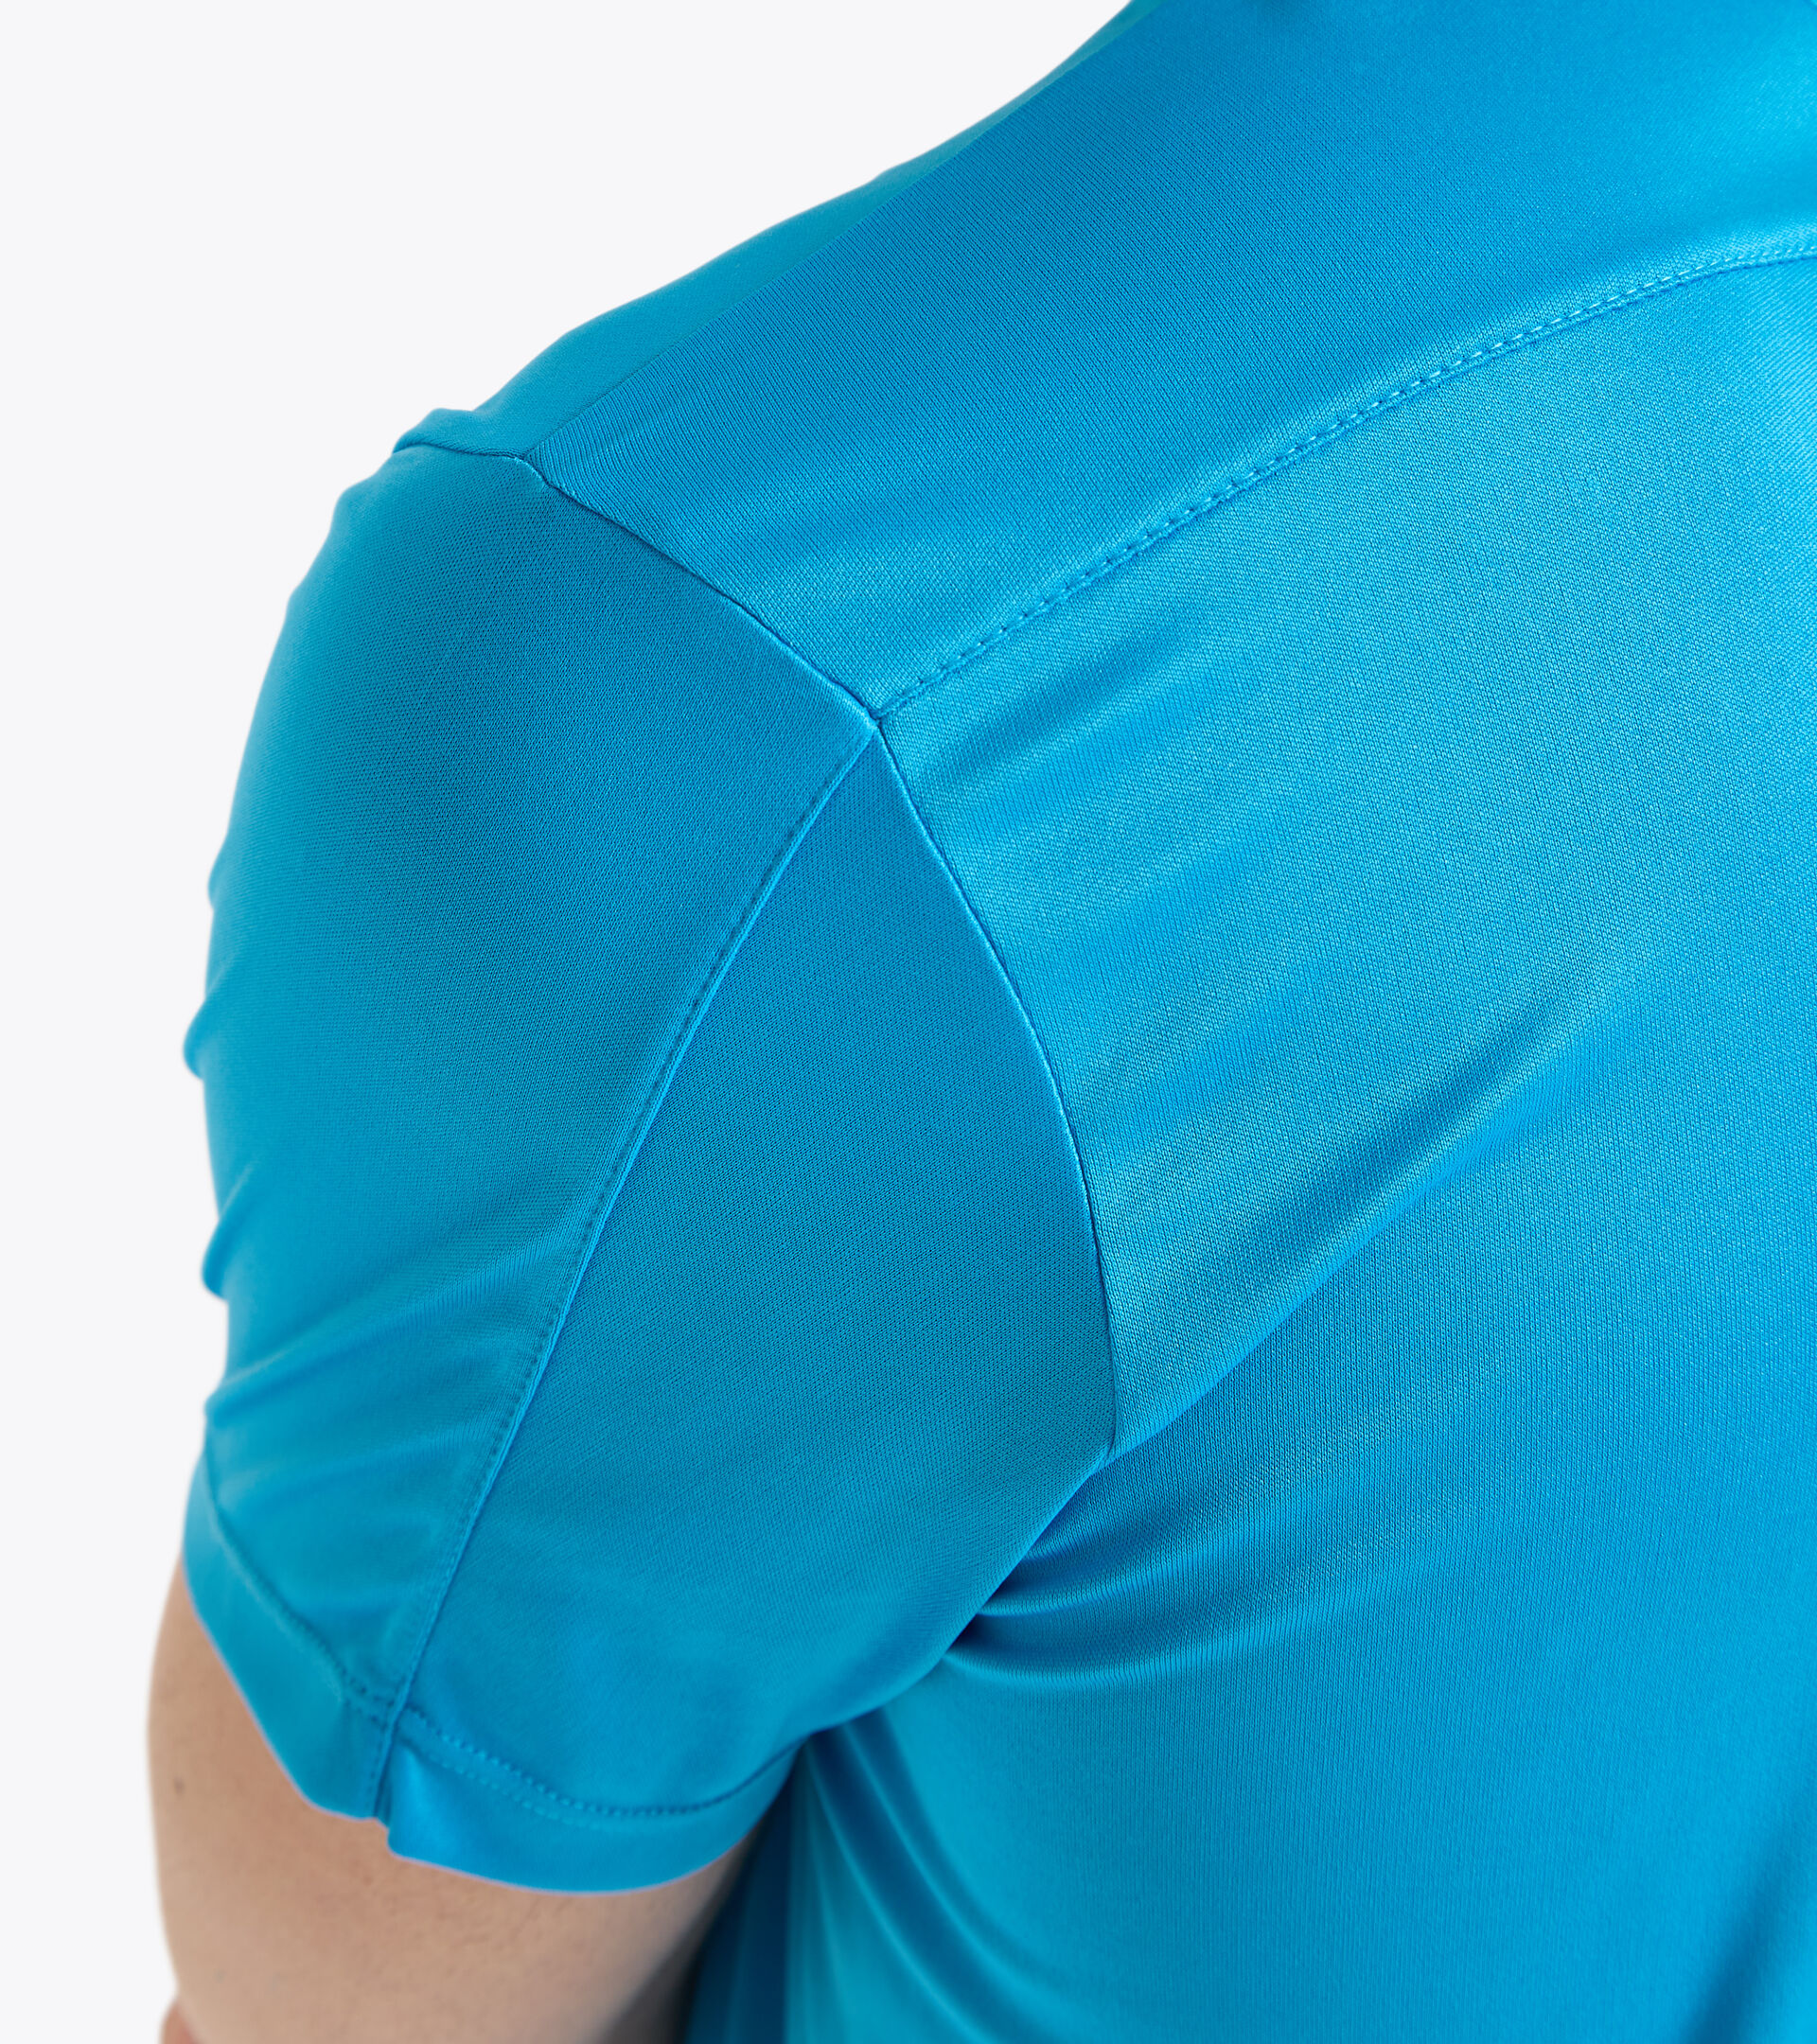 Camiseta de tenis - Hombre T-SHIRT TEAM AZUL REAL FLUO - Diadora